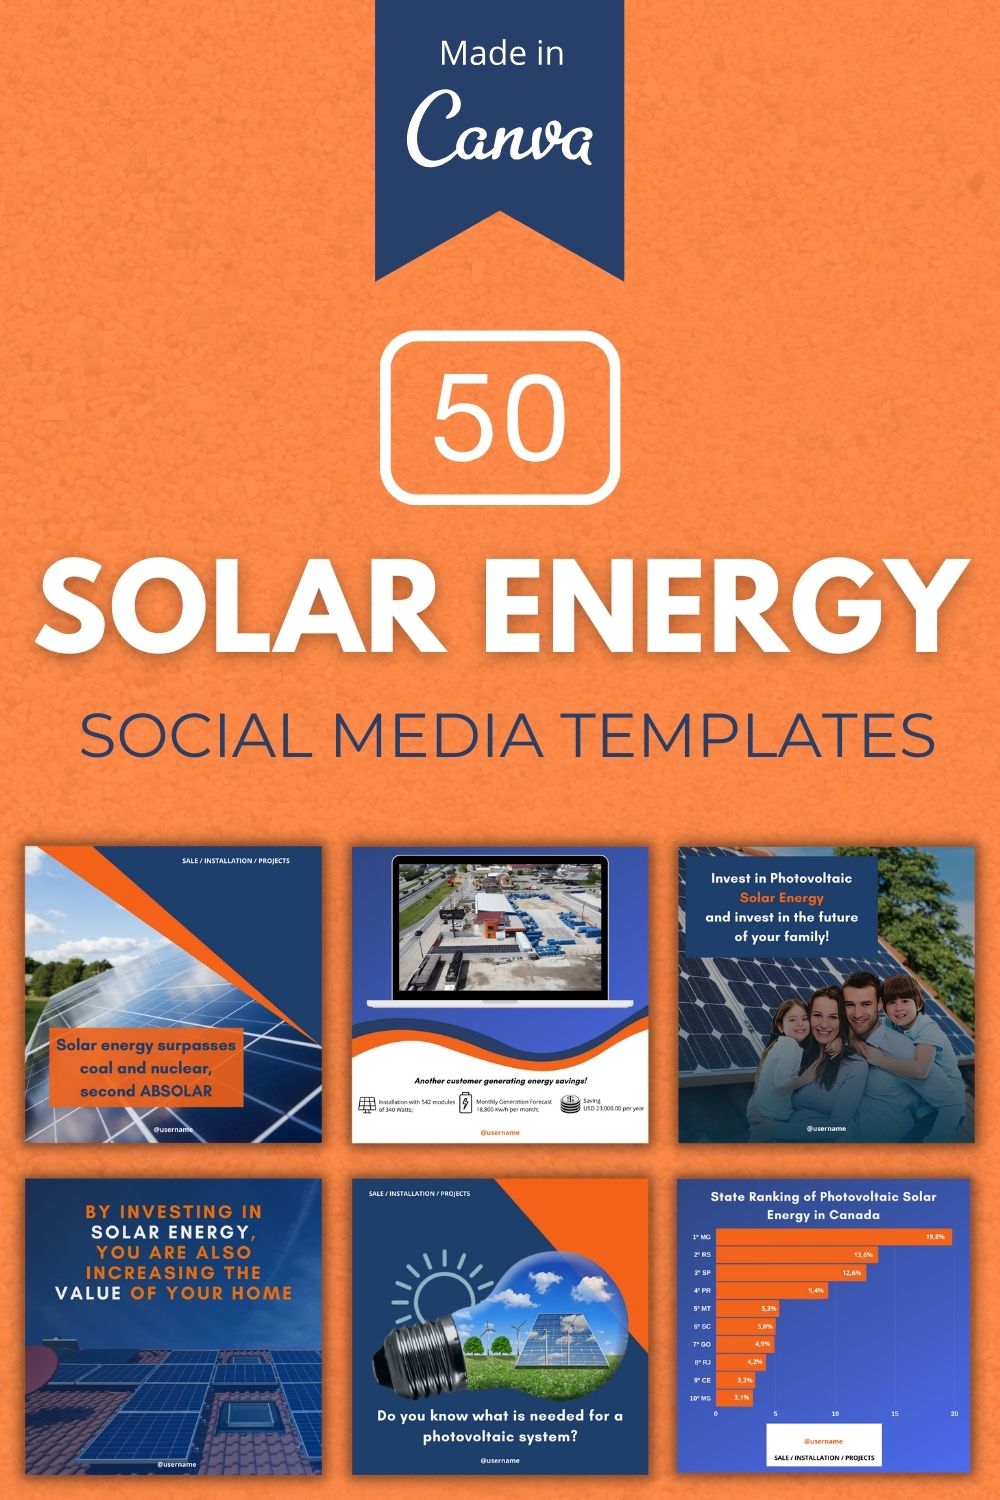 50 Solar Energy Canva Templates For Social Media pinterest preview image.